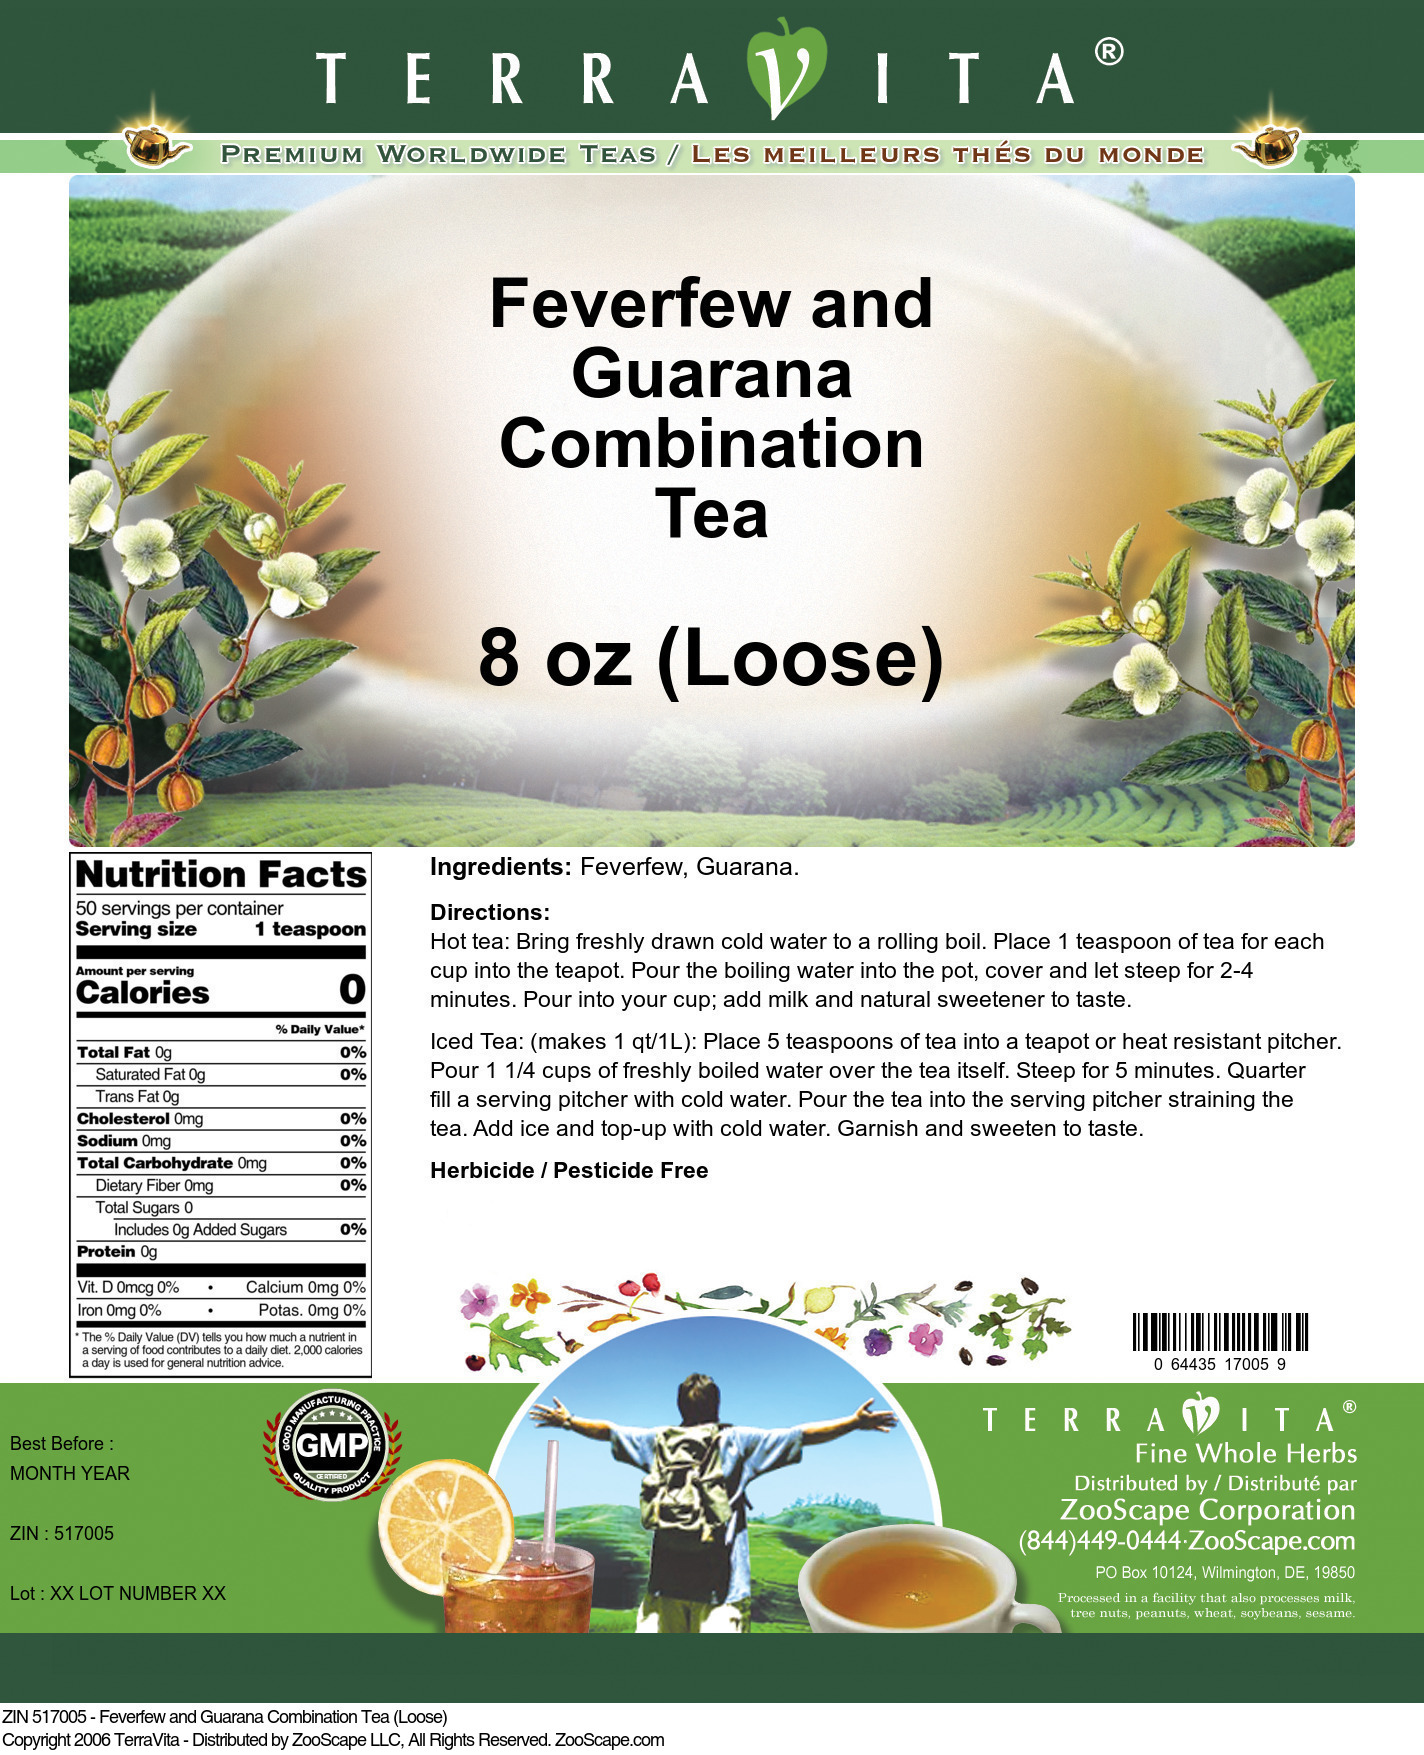 Feverfew and Guarana Combination Tea (Loose) - Label